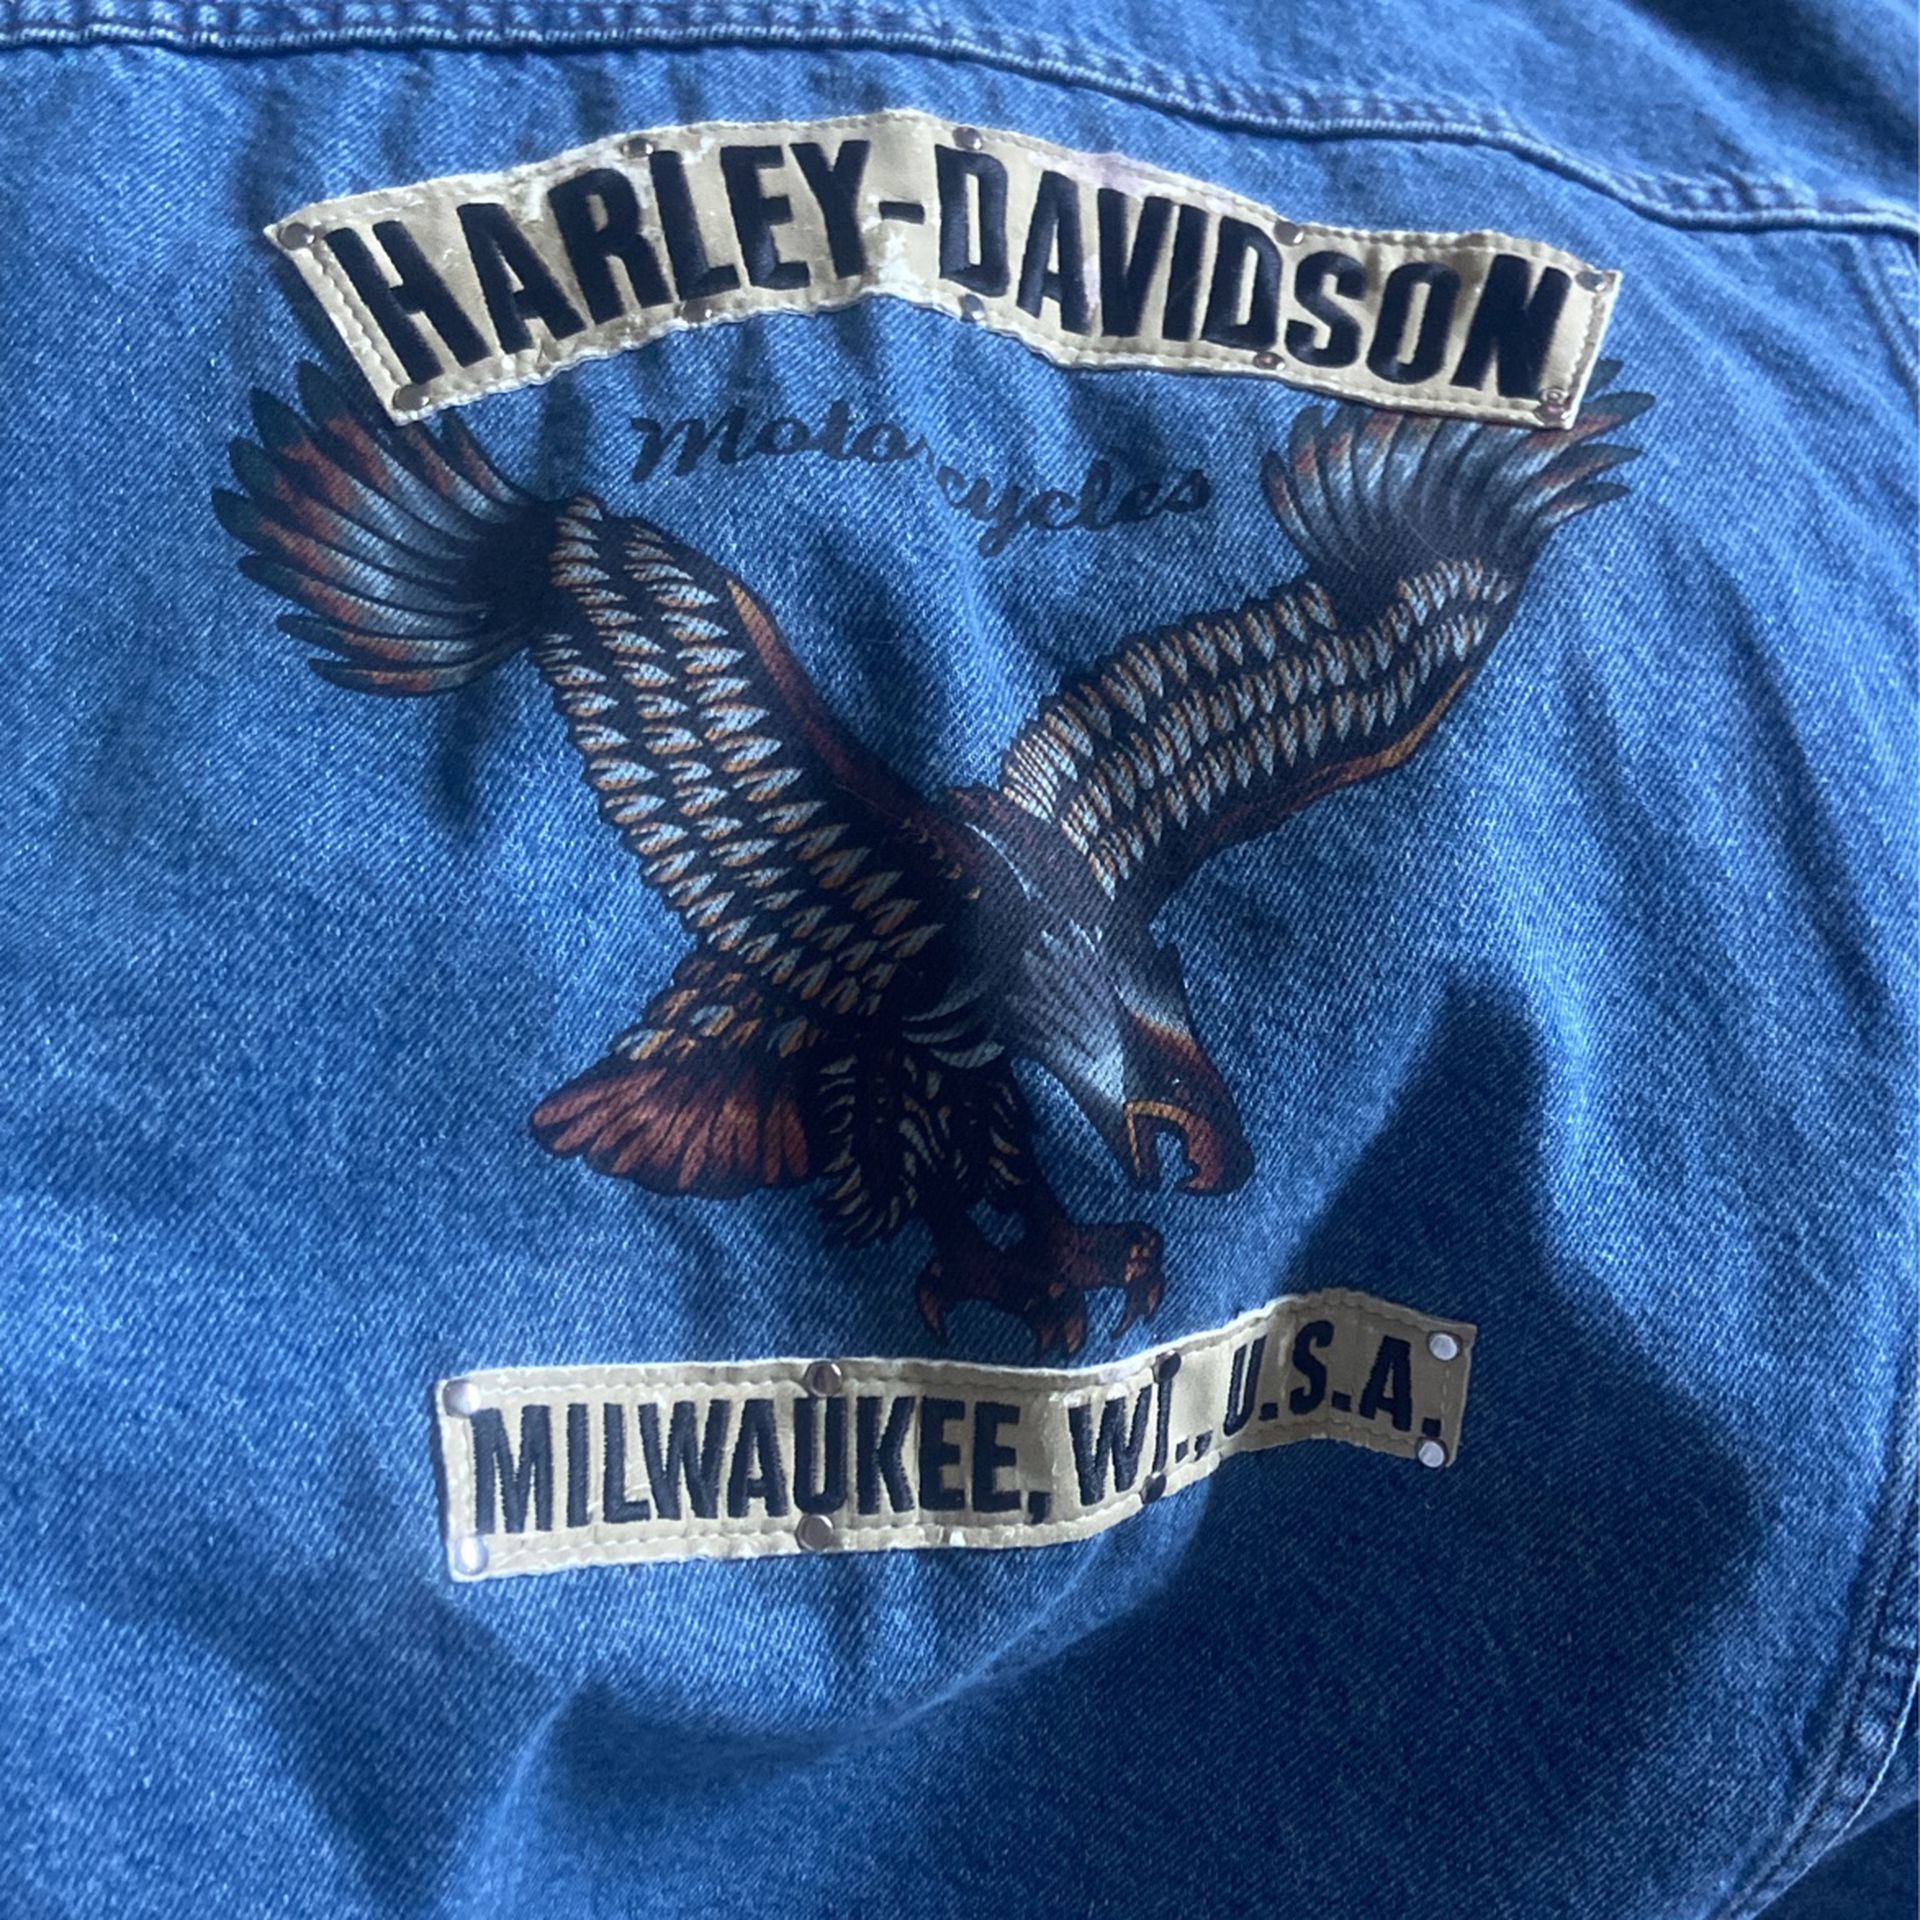 Authentic Denim Harley Davidson Denim Vest 